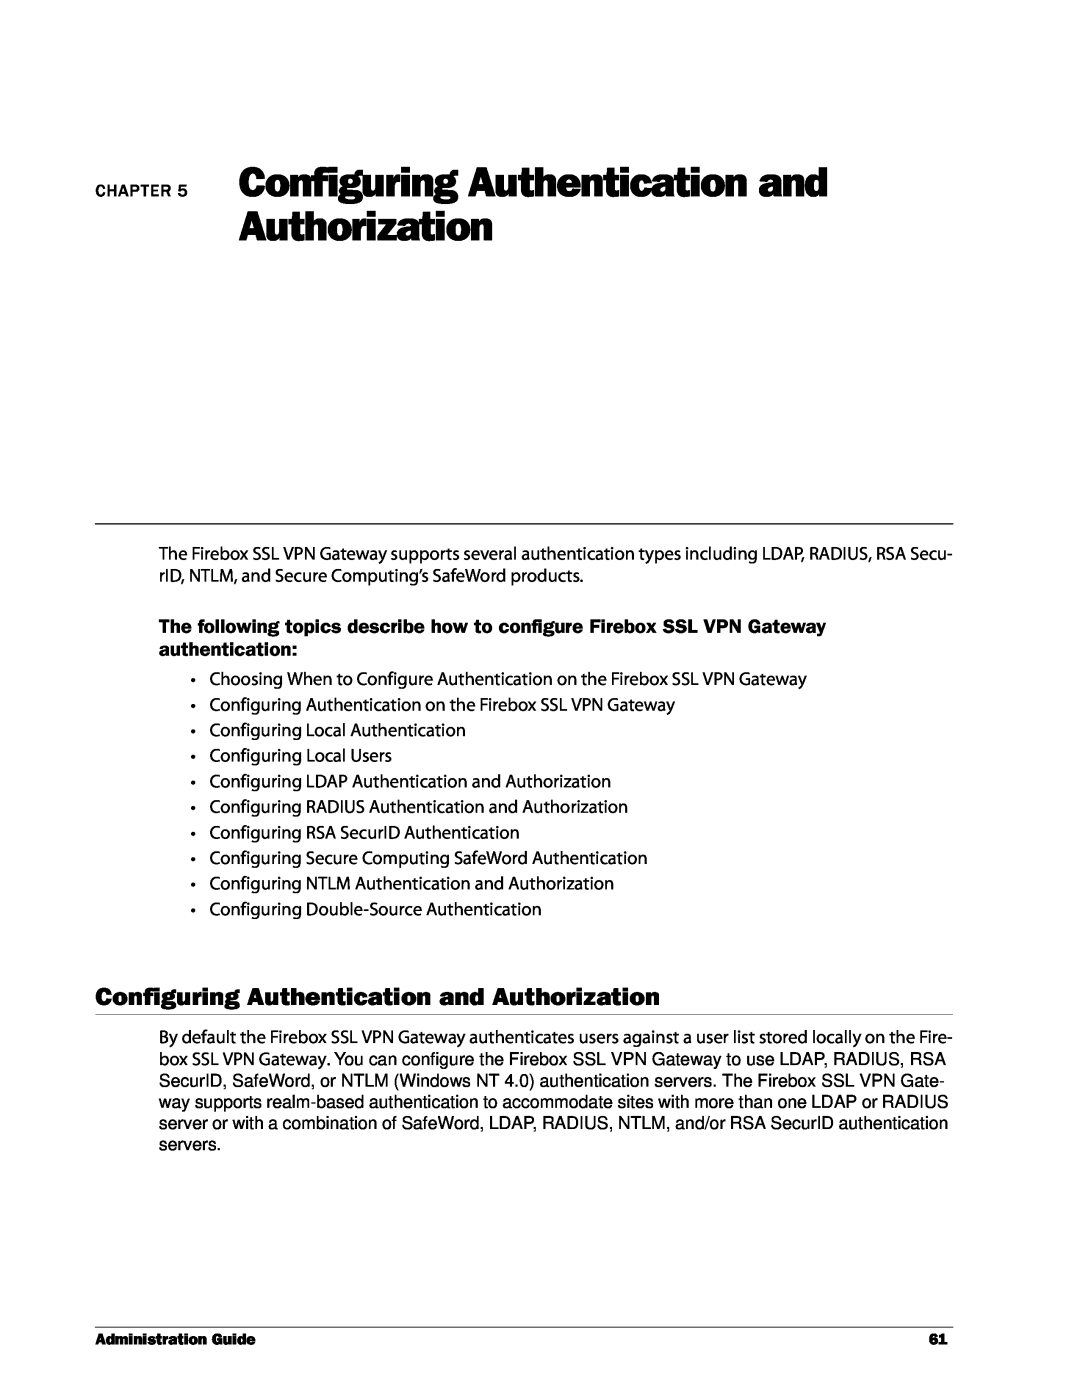 WatchGuard Technologies SSL VPN manual Configuring Authentication and, Authorization 